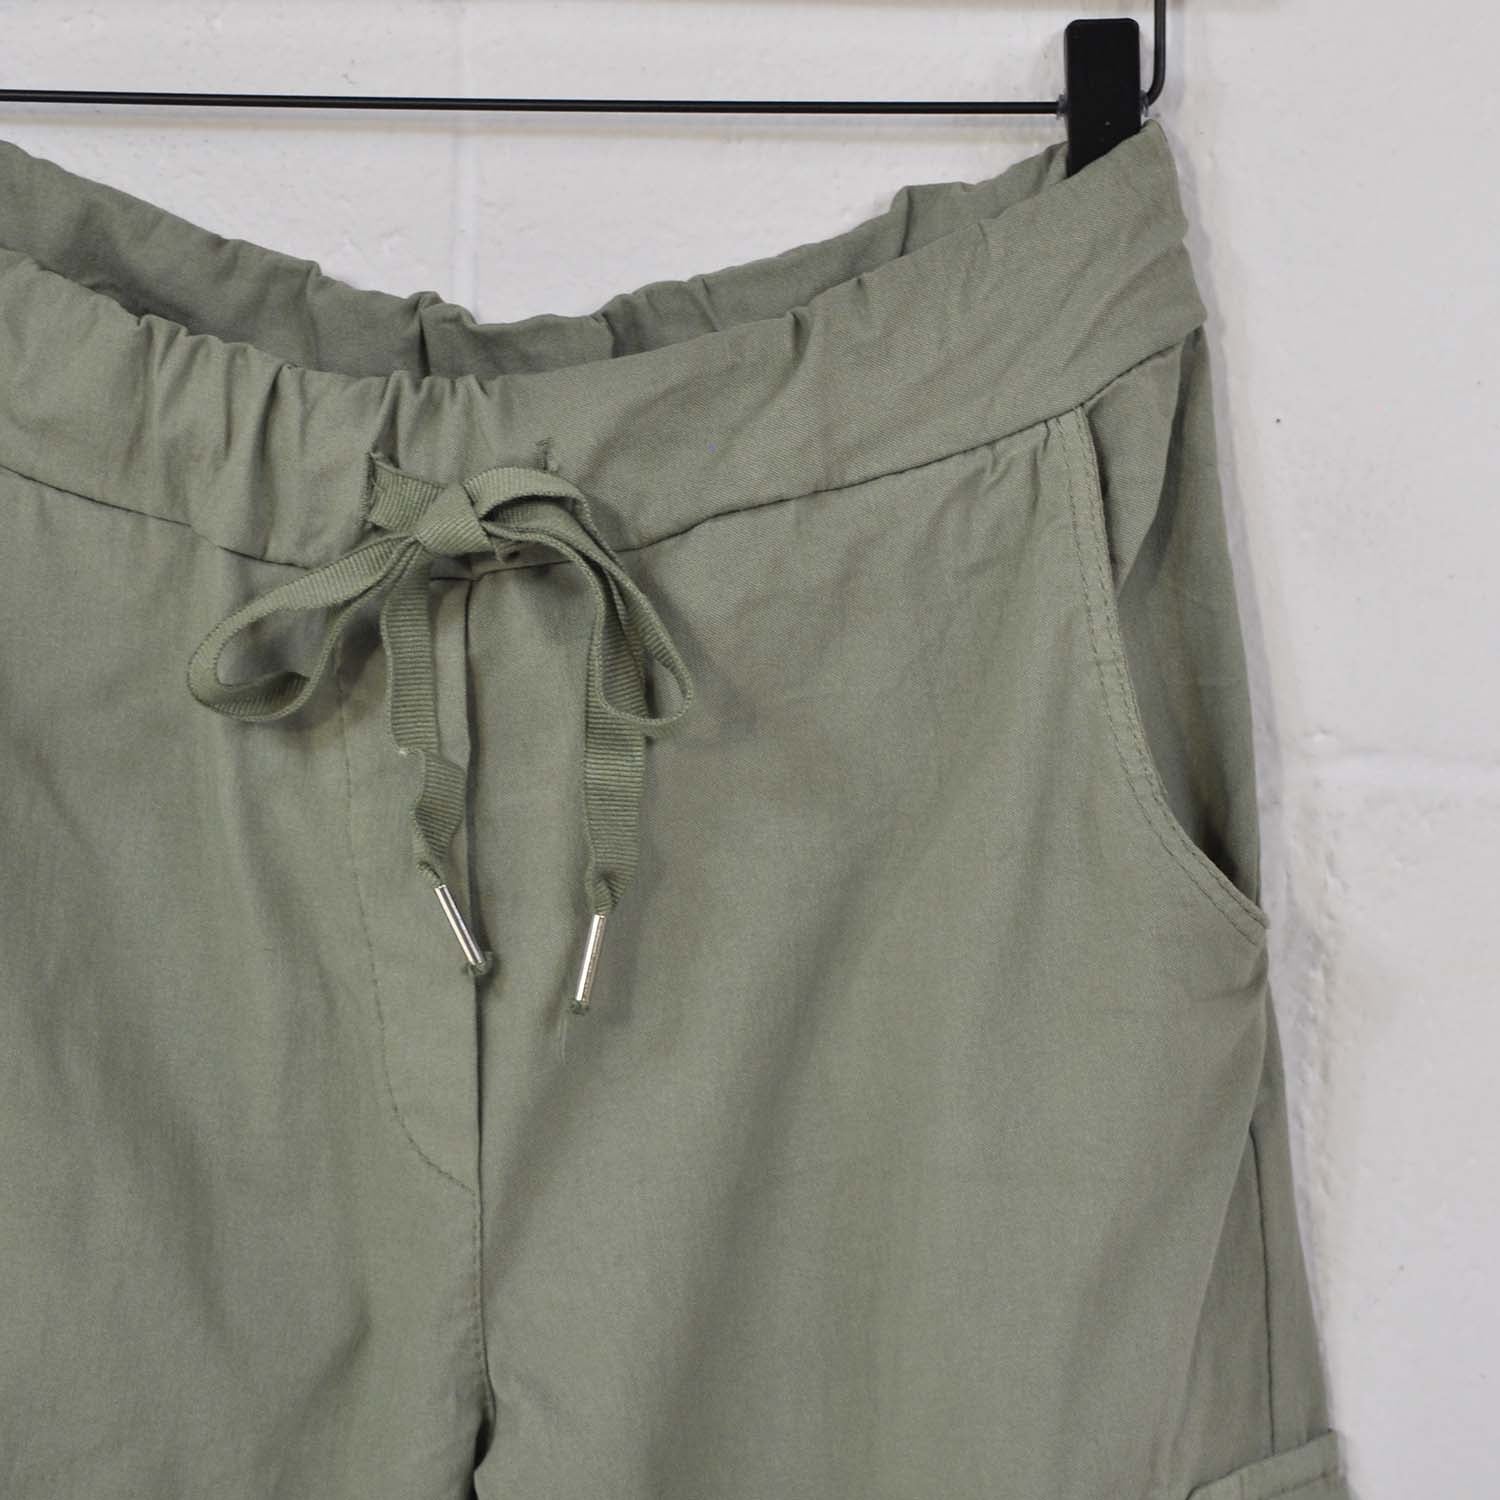 Green cargo pants